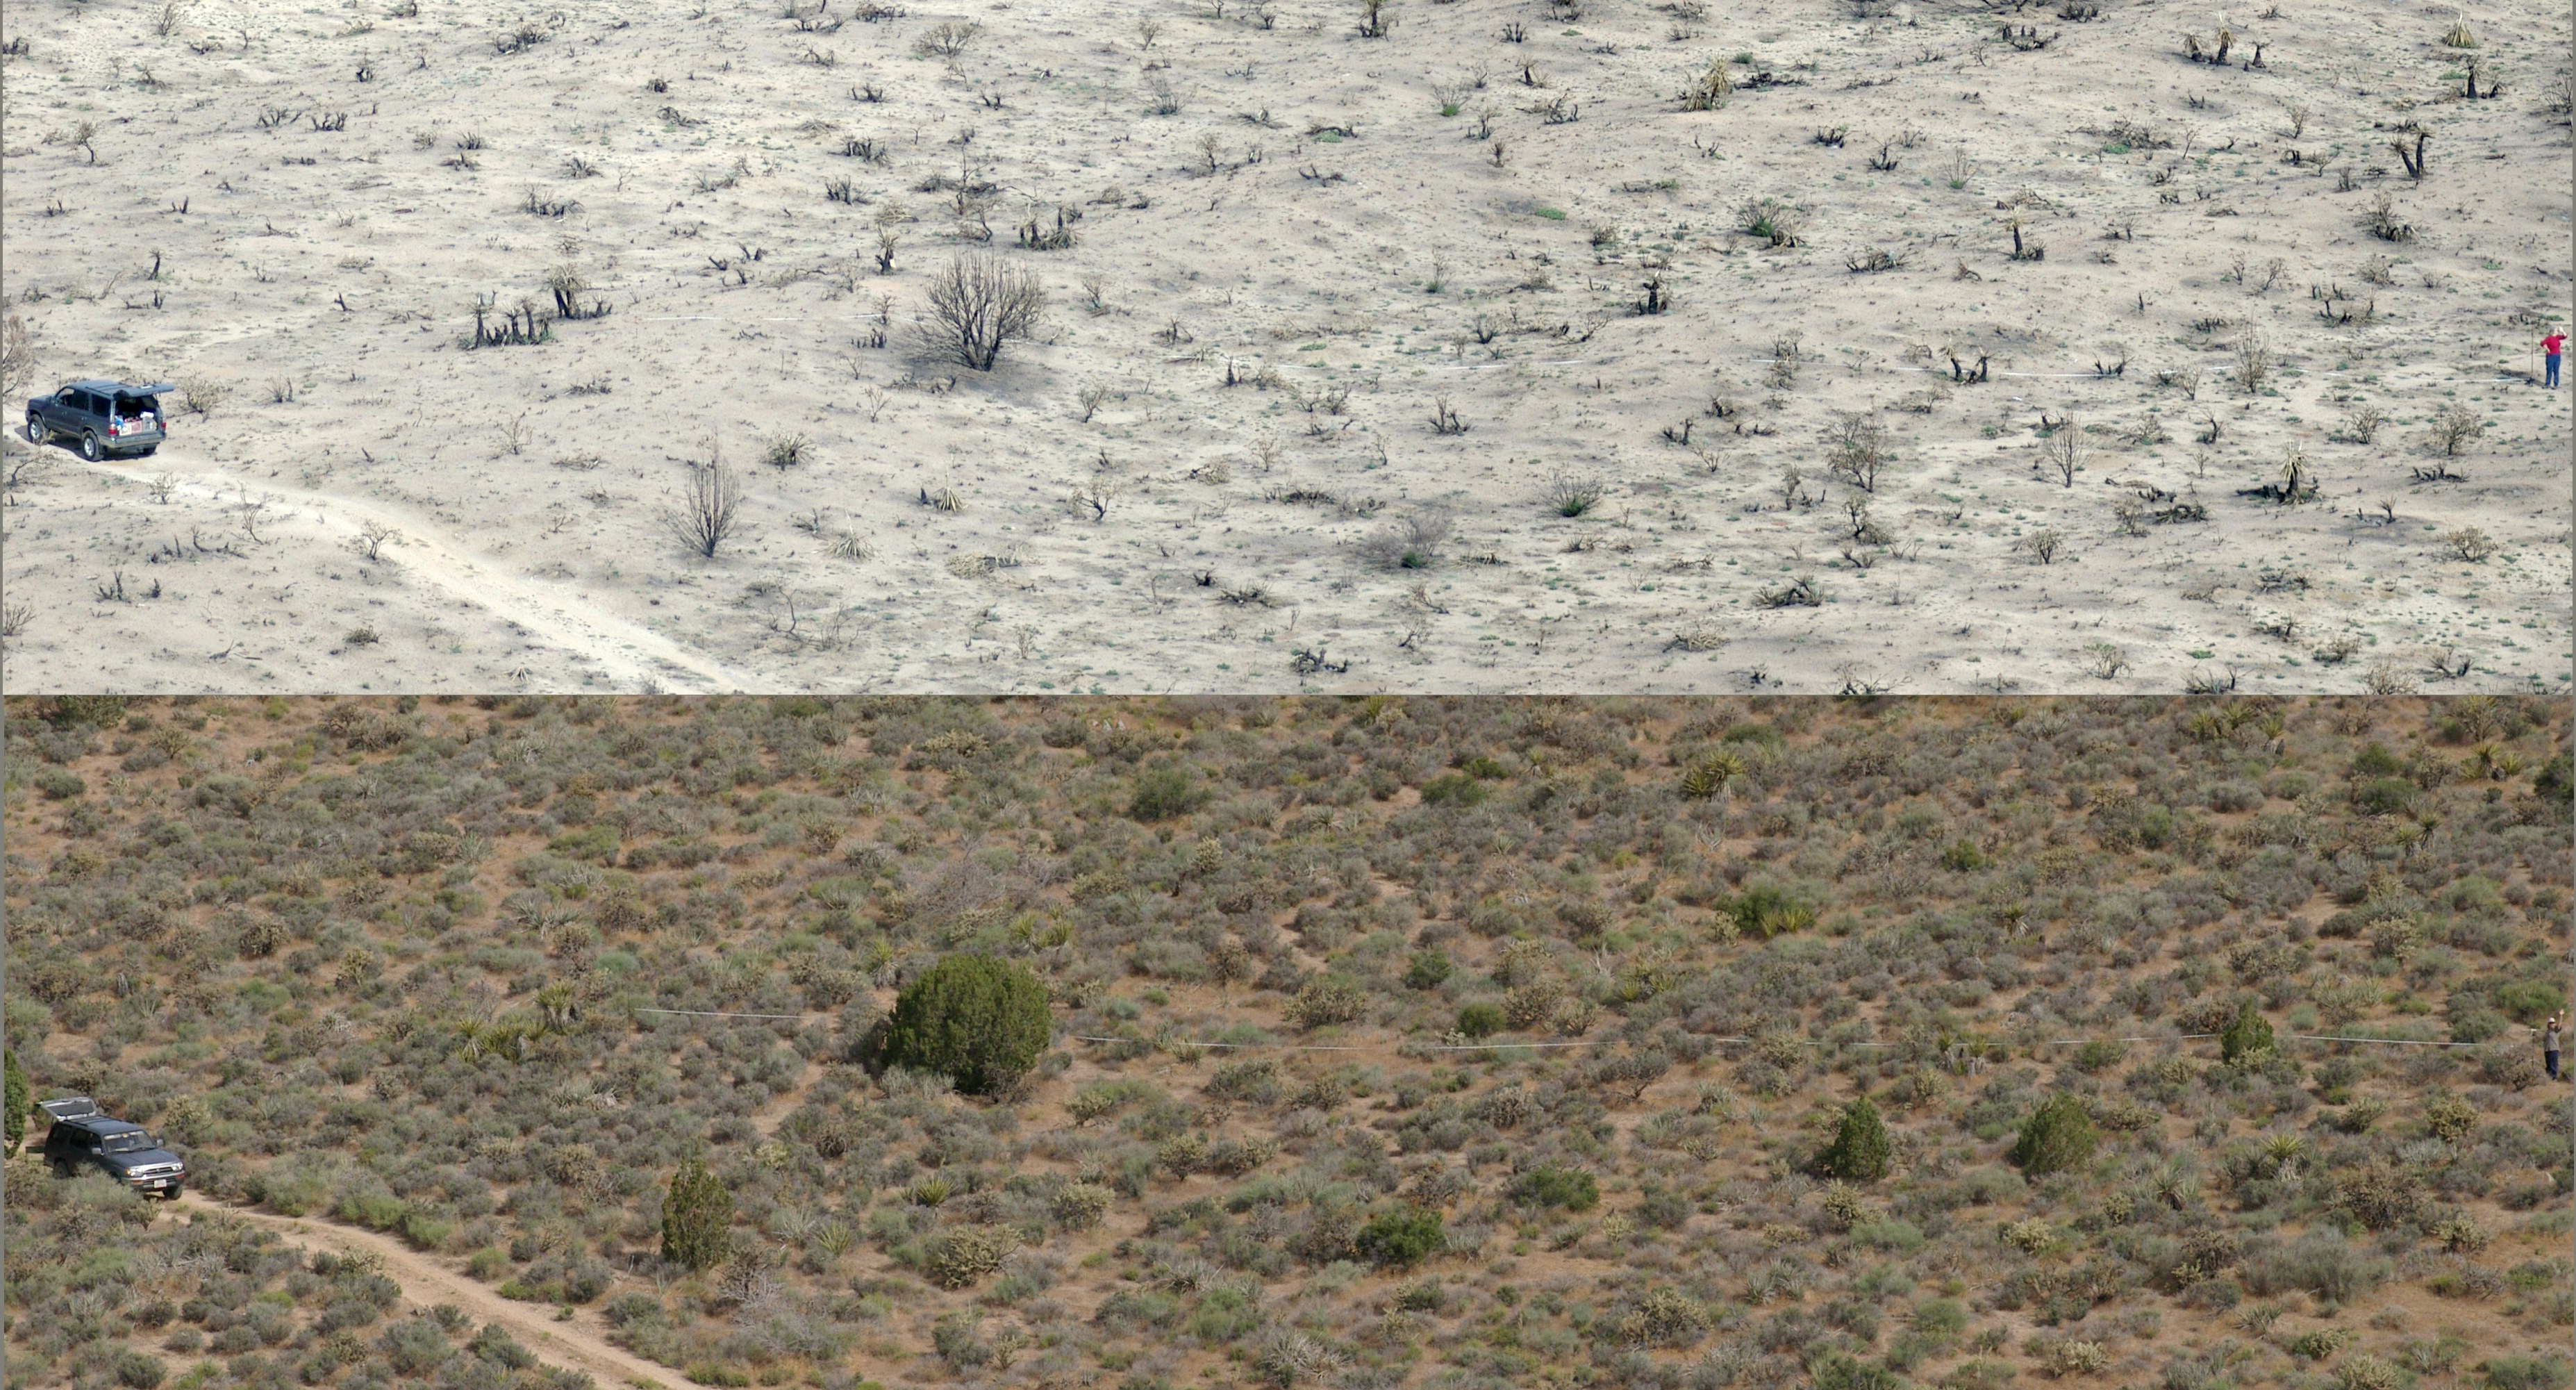 Salvia dorrii, Mojave National Preserve, San Bernardino County, California